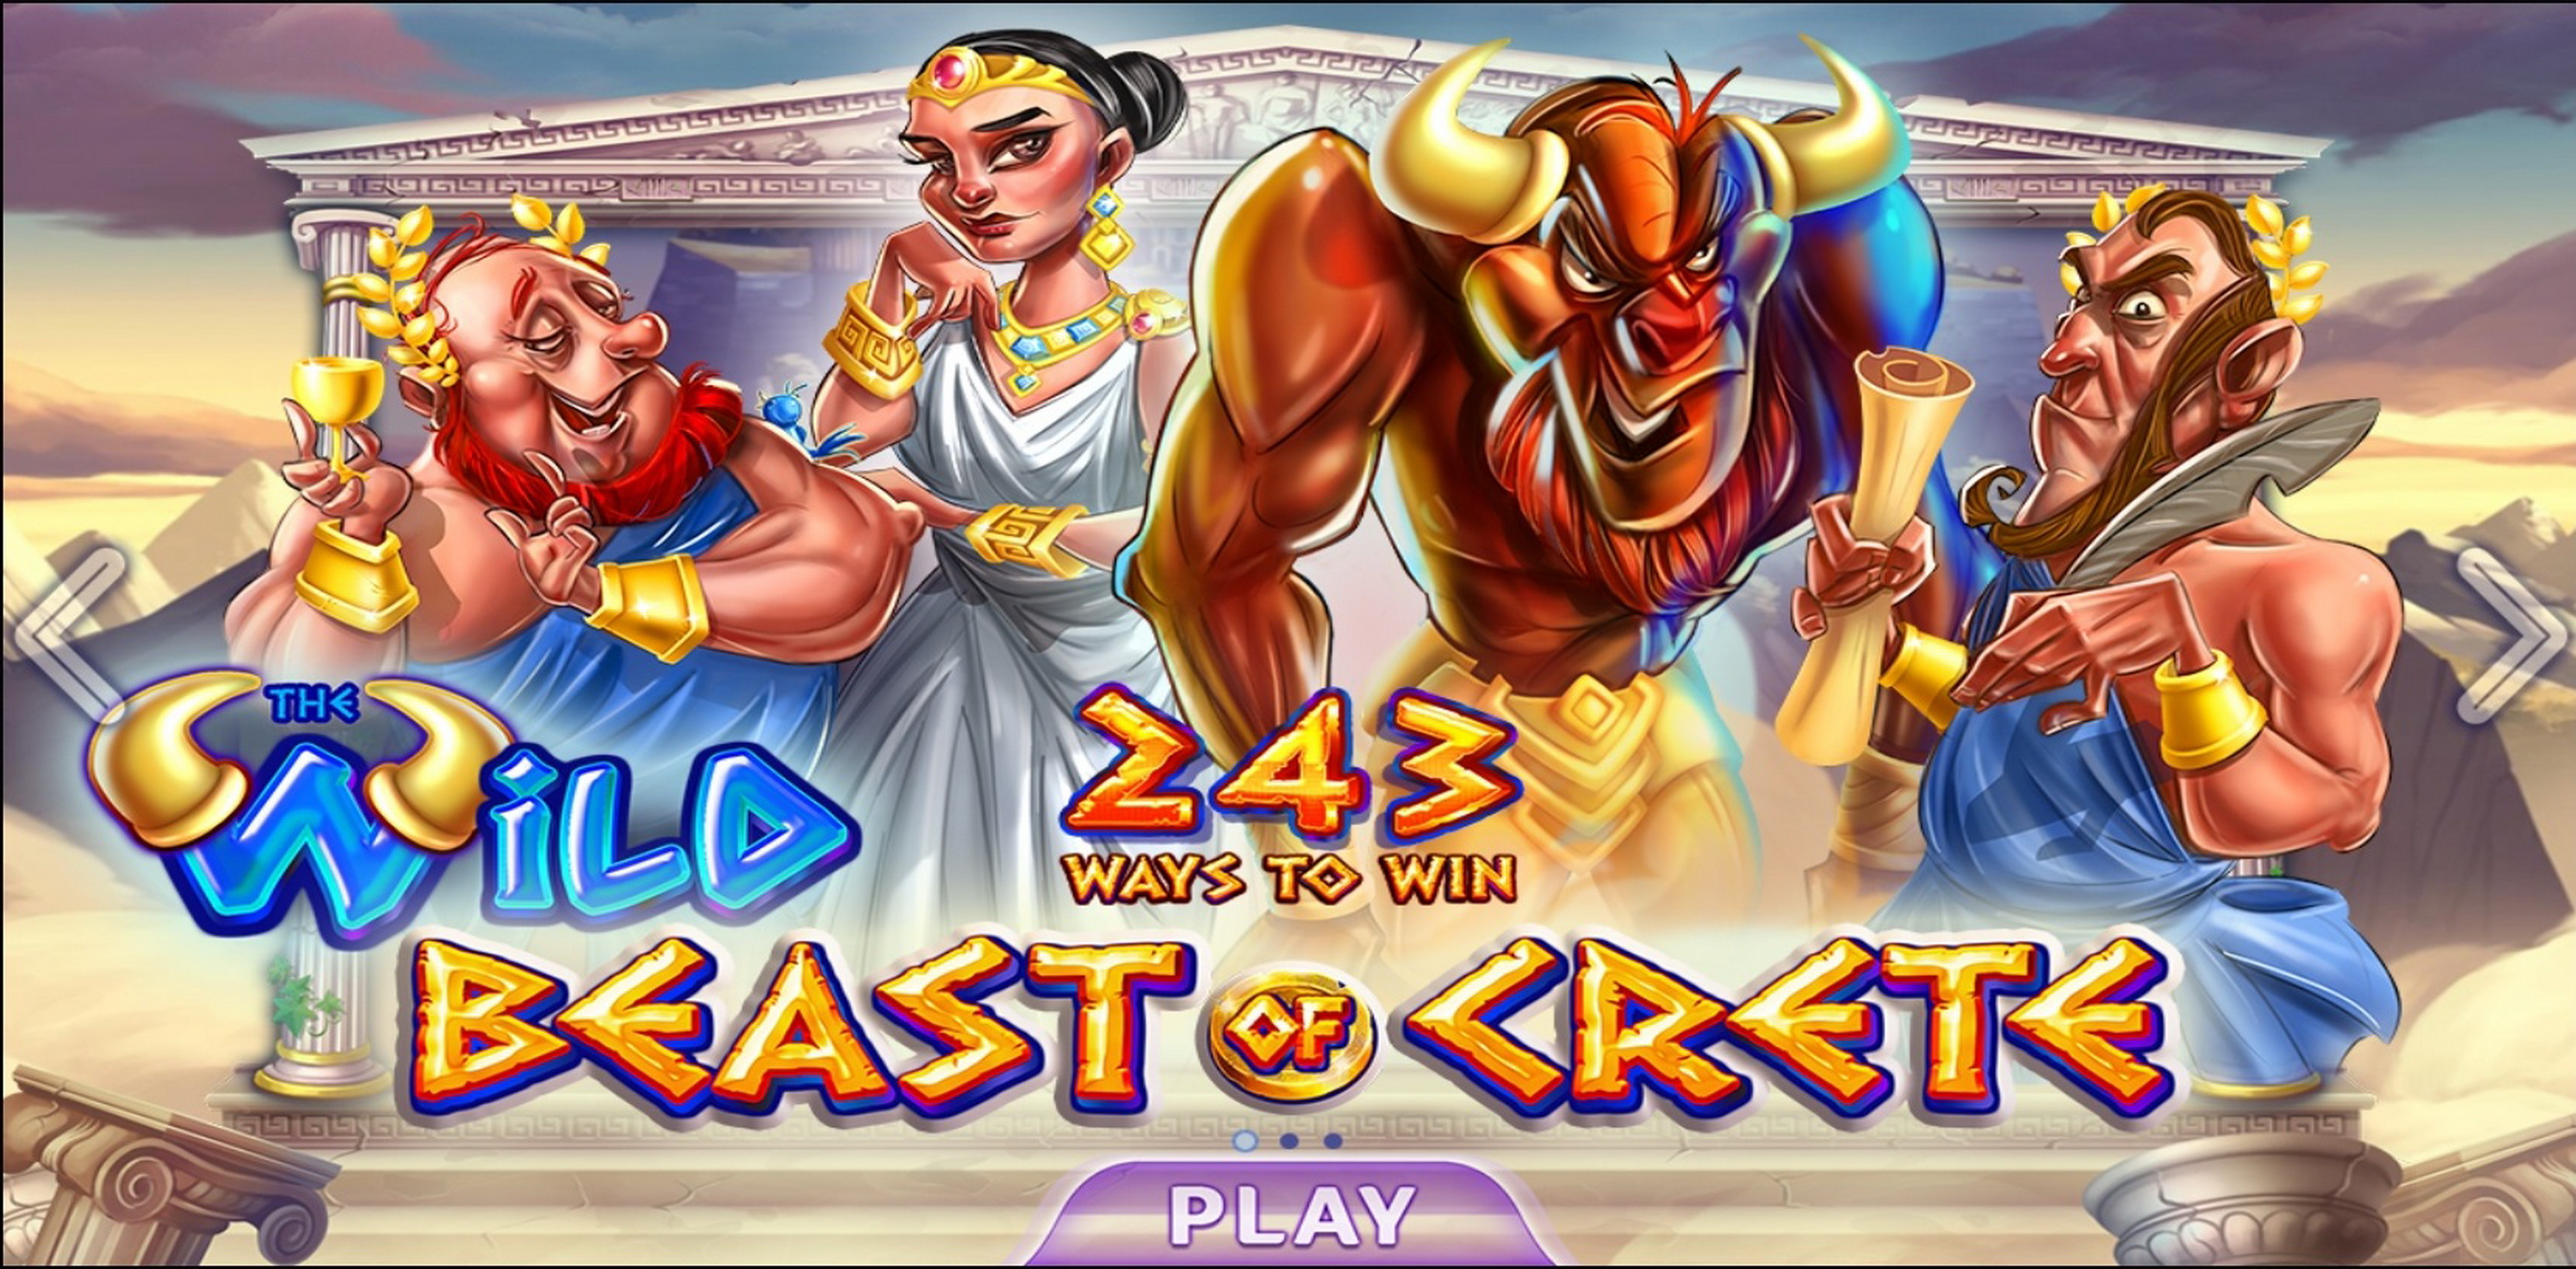 Play Wild Beast of Crete Free Casino Slot Game by Felix Gaming